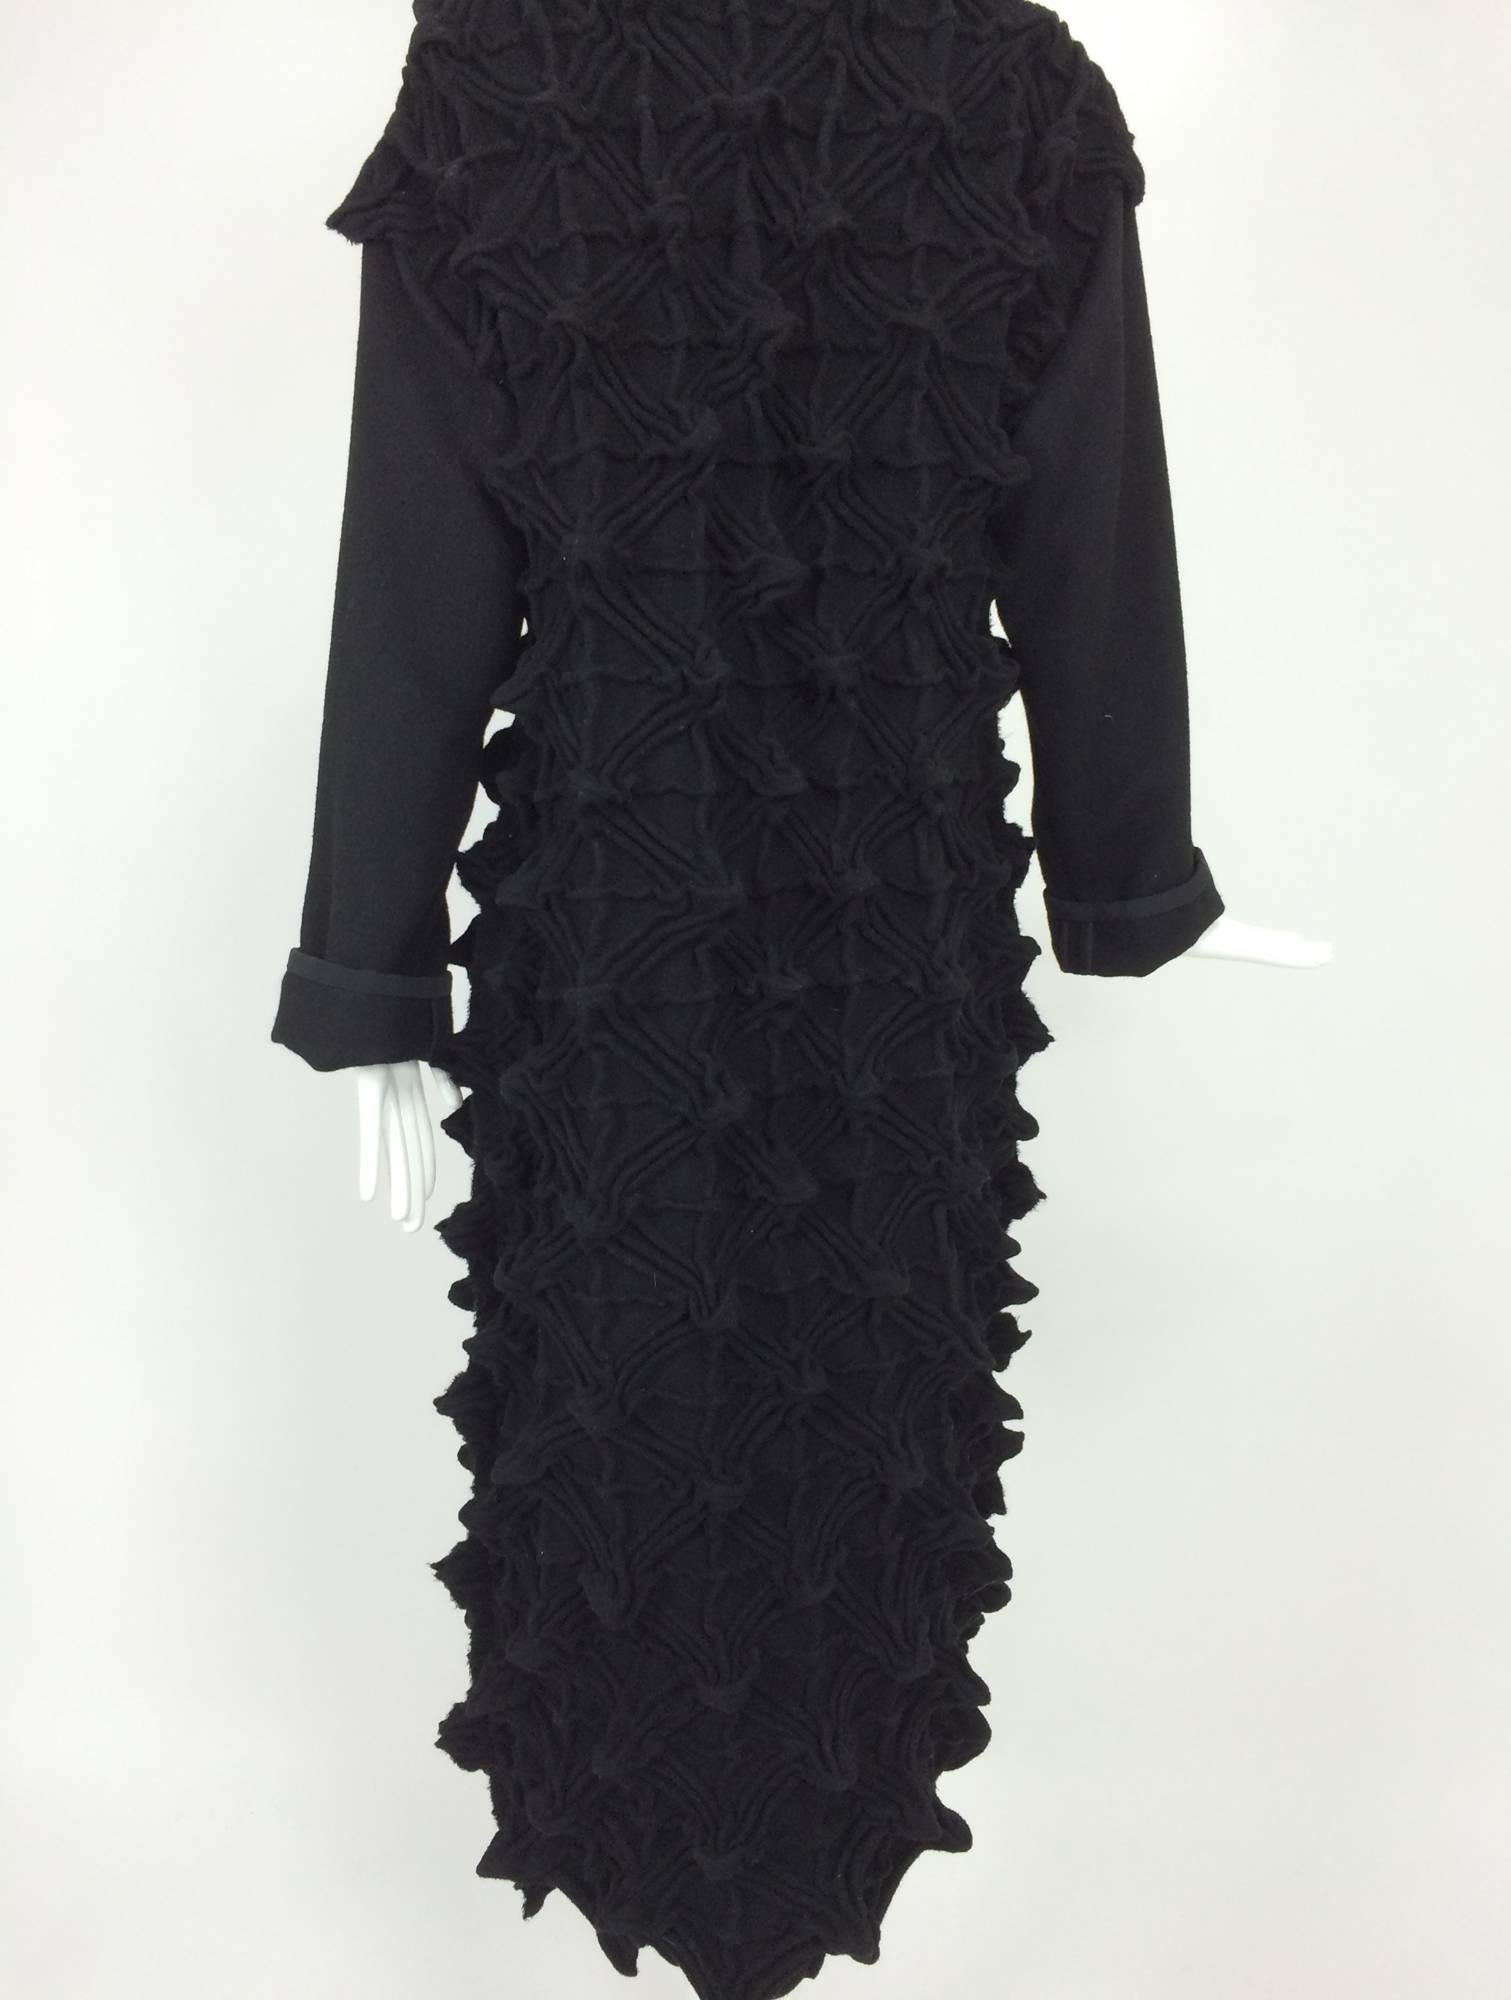 Black Rare Mary E. Jaeger art to wear shibori manipulated wool coat one of a kind